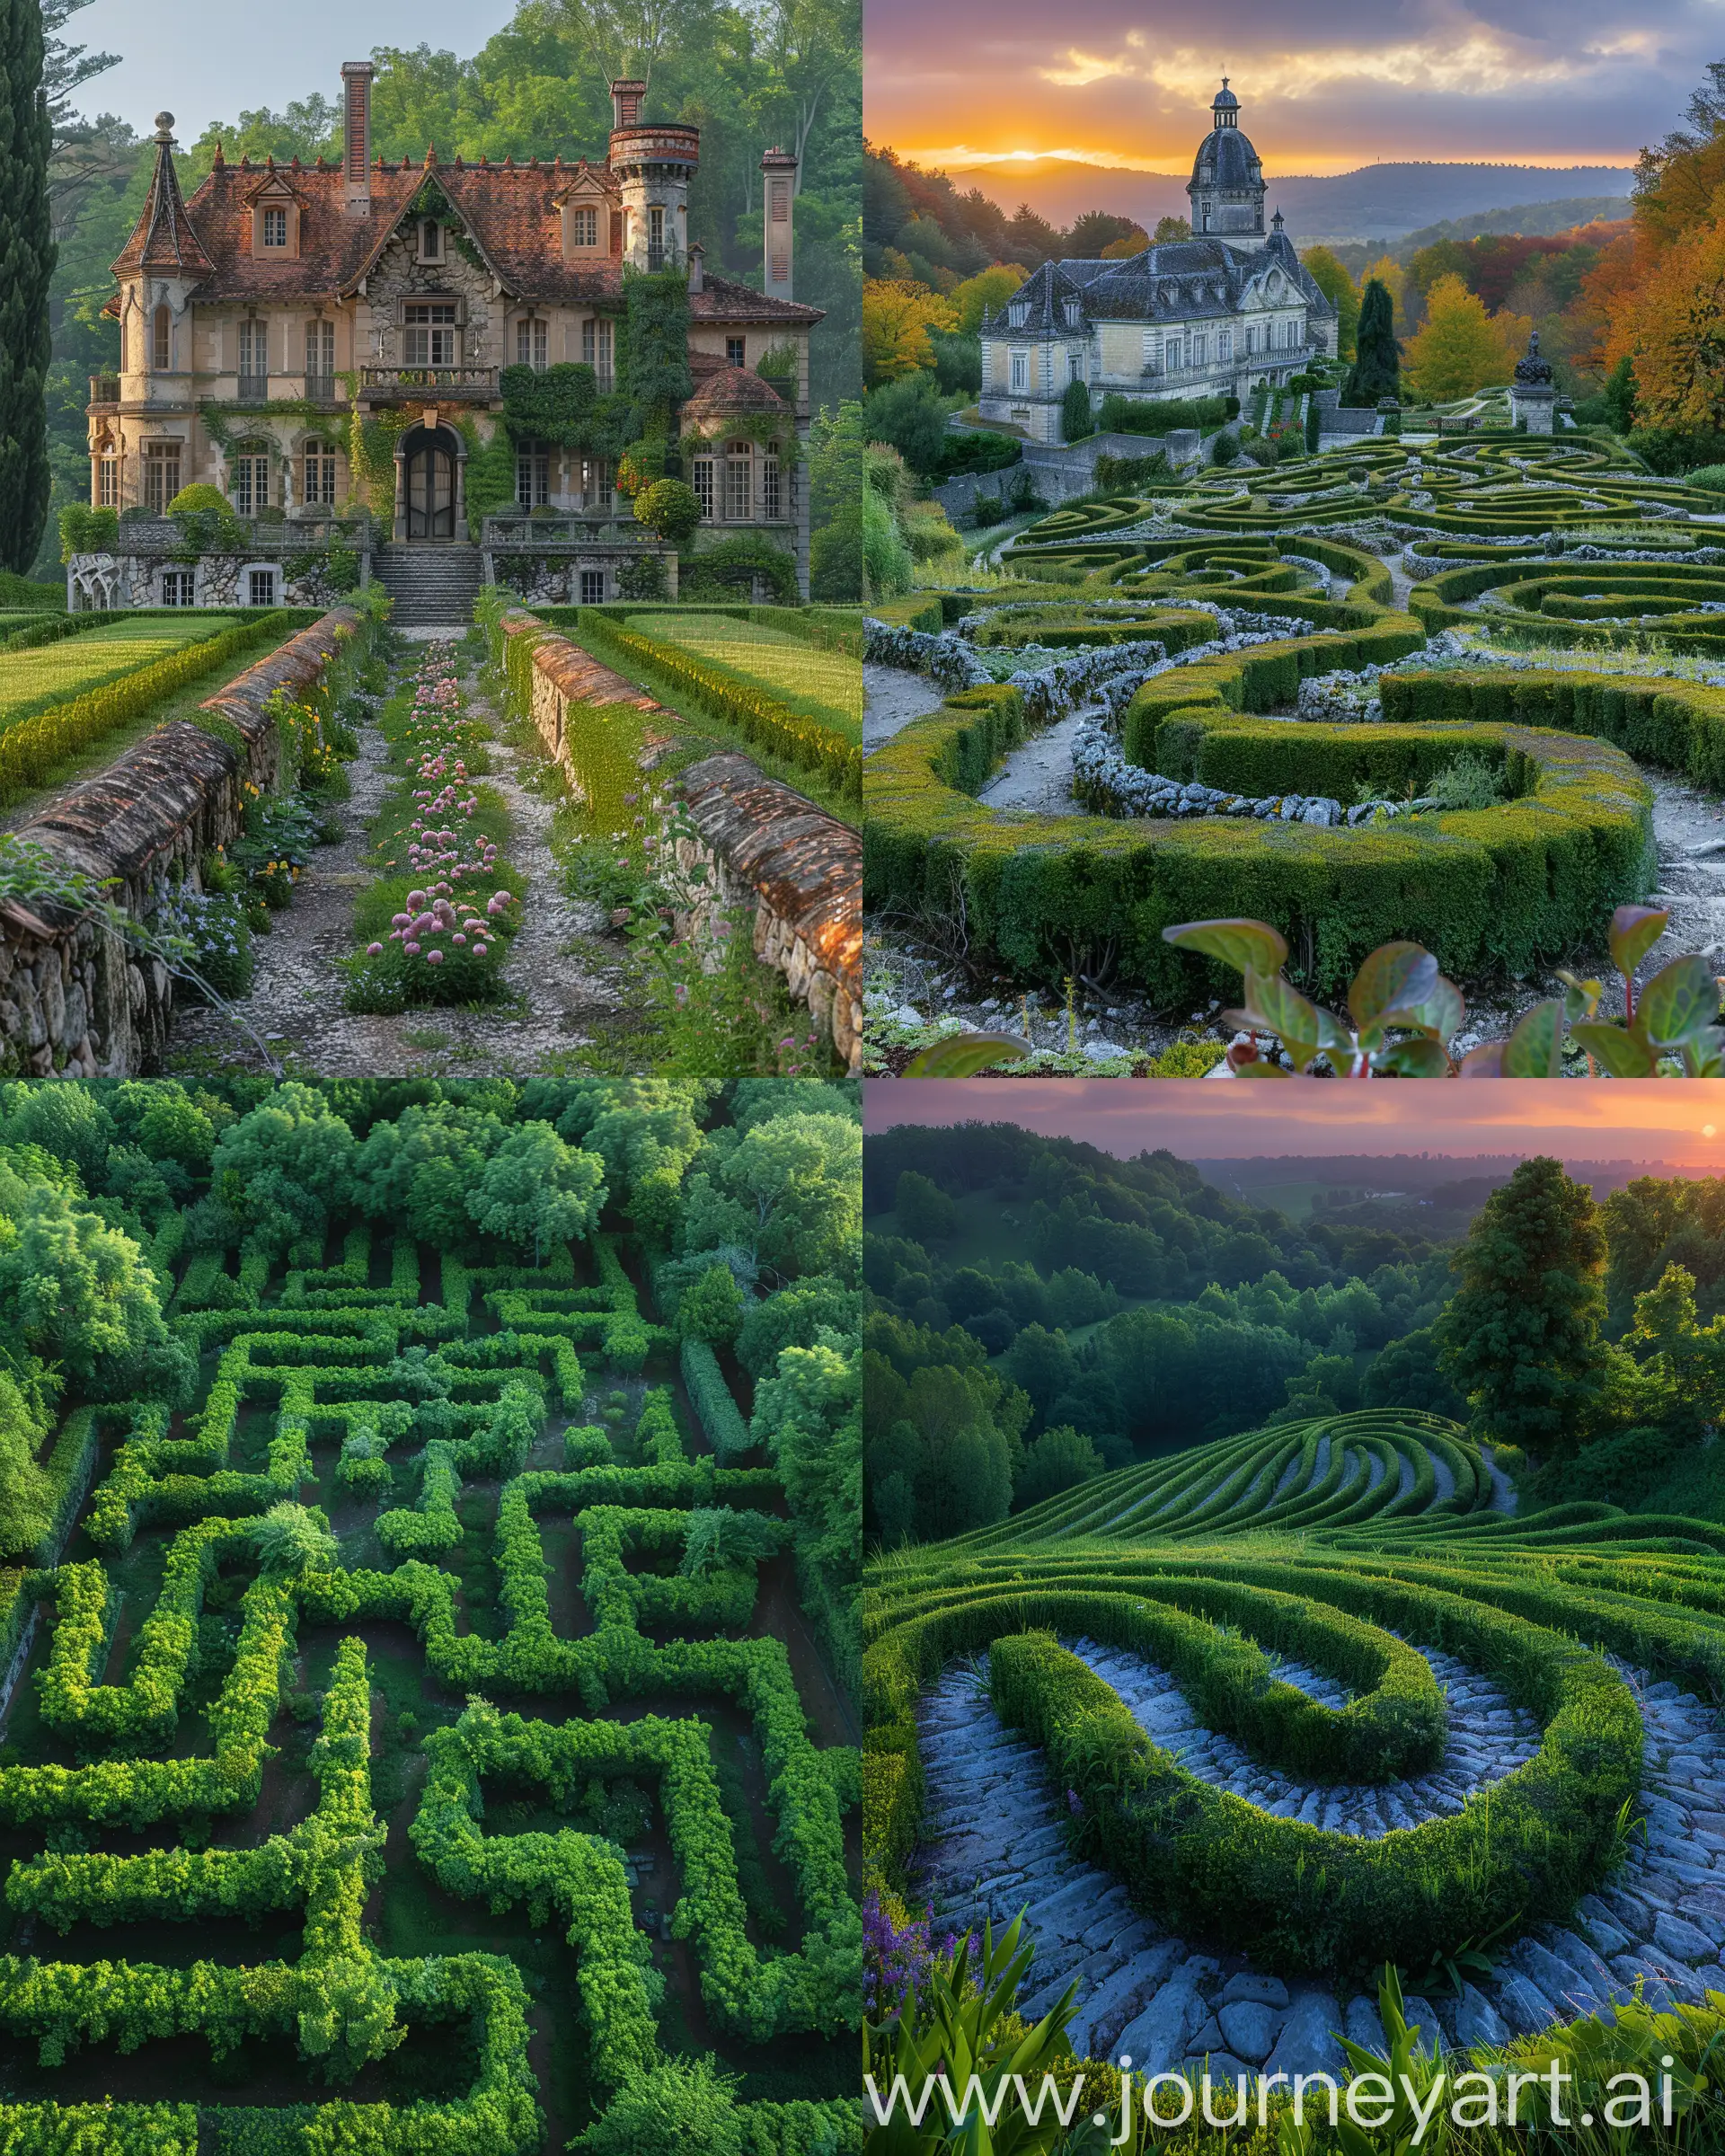 Majestic-Marqueyssac-Gardens-Captured-in-Stunning-UHD-Photography